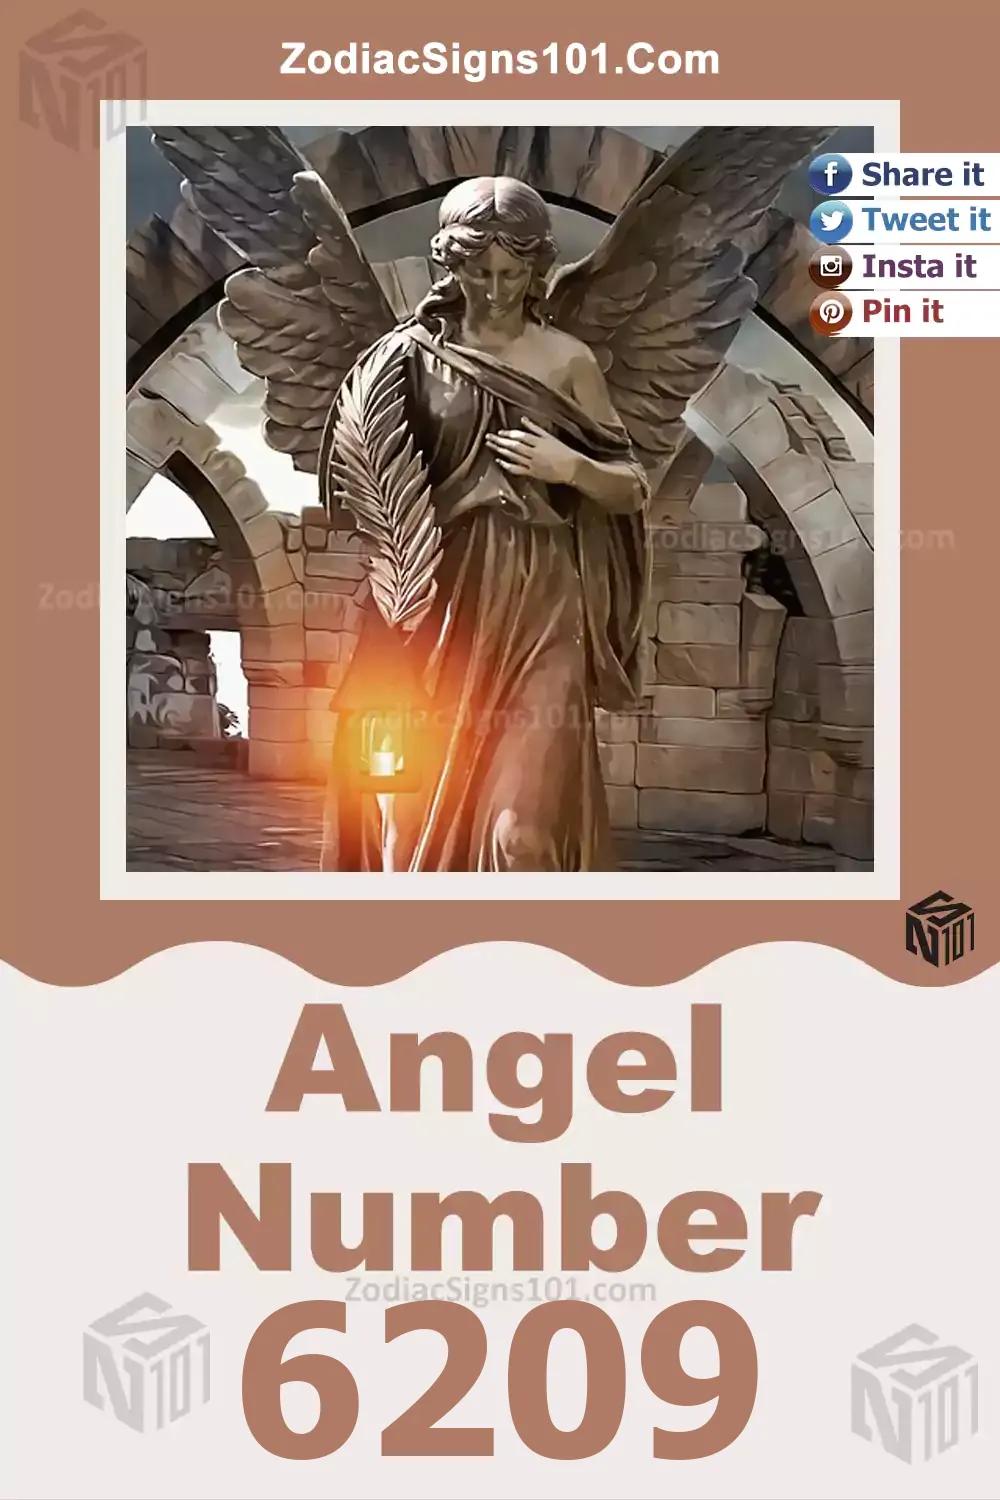 6209-Angel-Number-Meaning.jpg